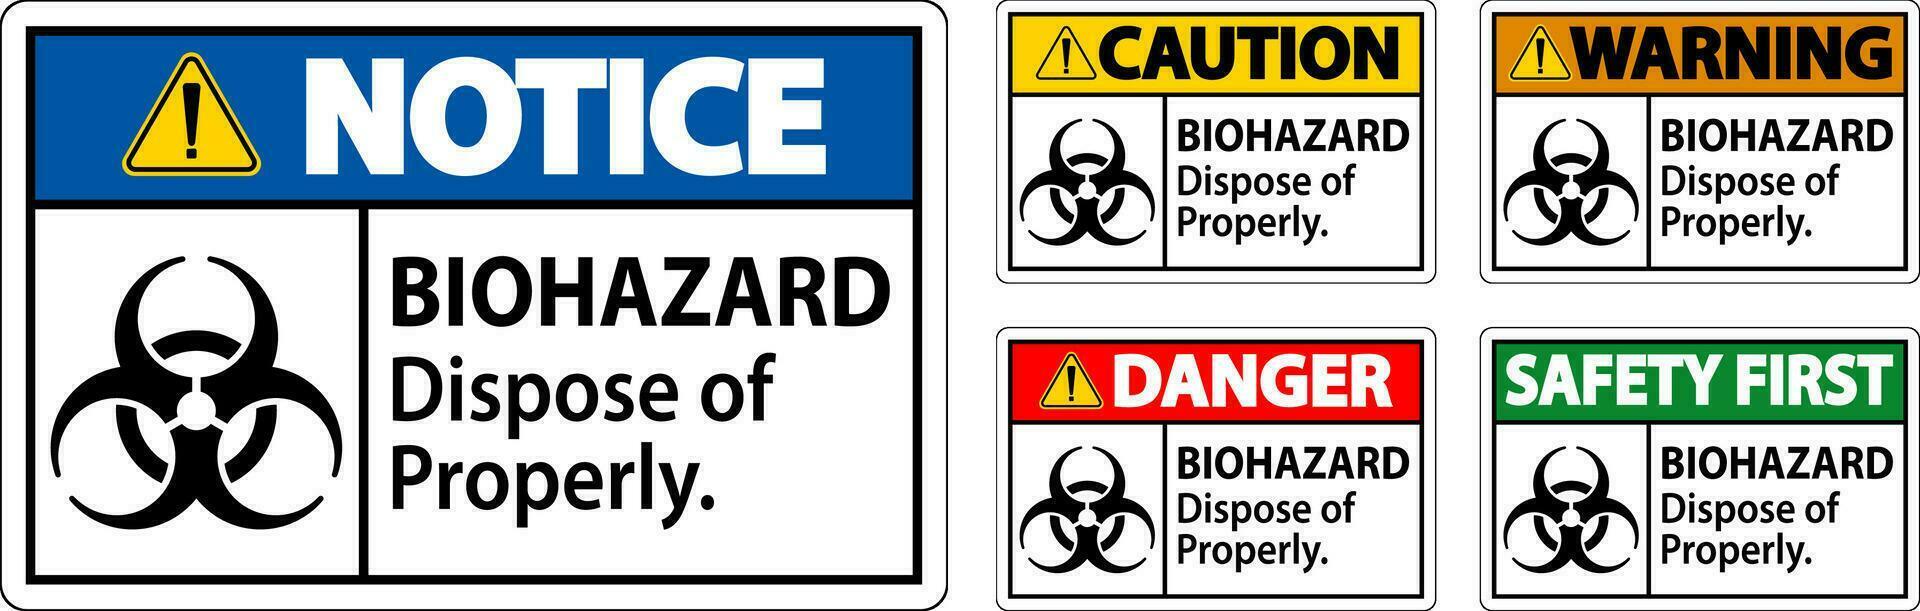 Biohazard Warning Label Biohazard Dispose Of Properly vector